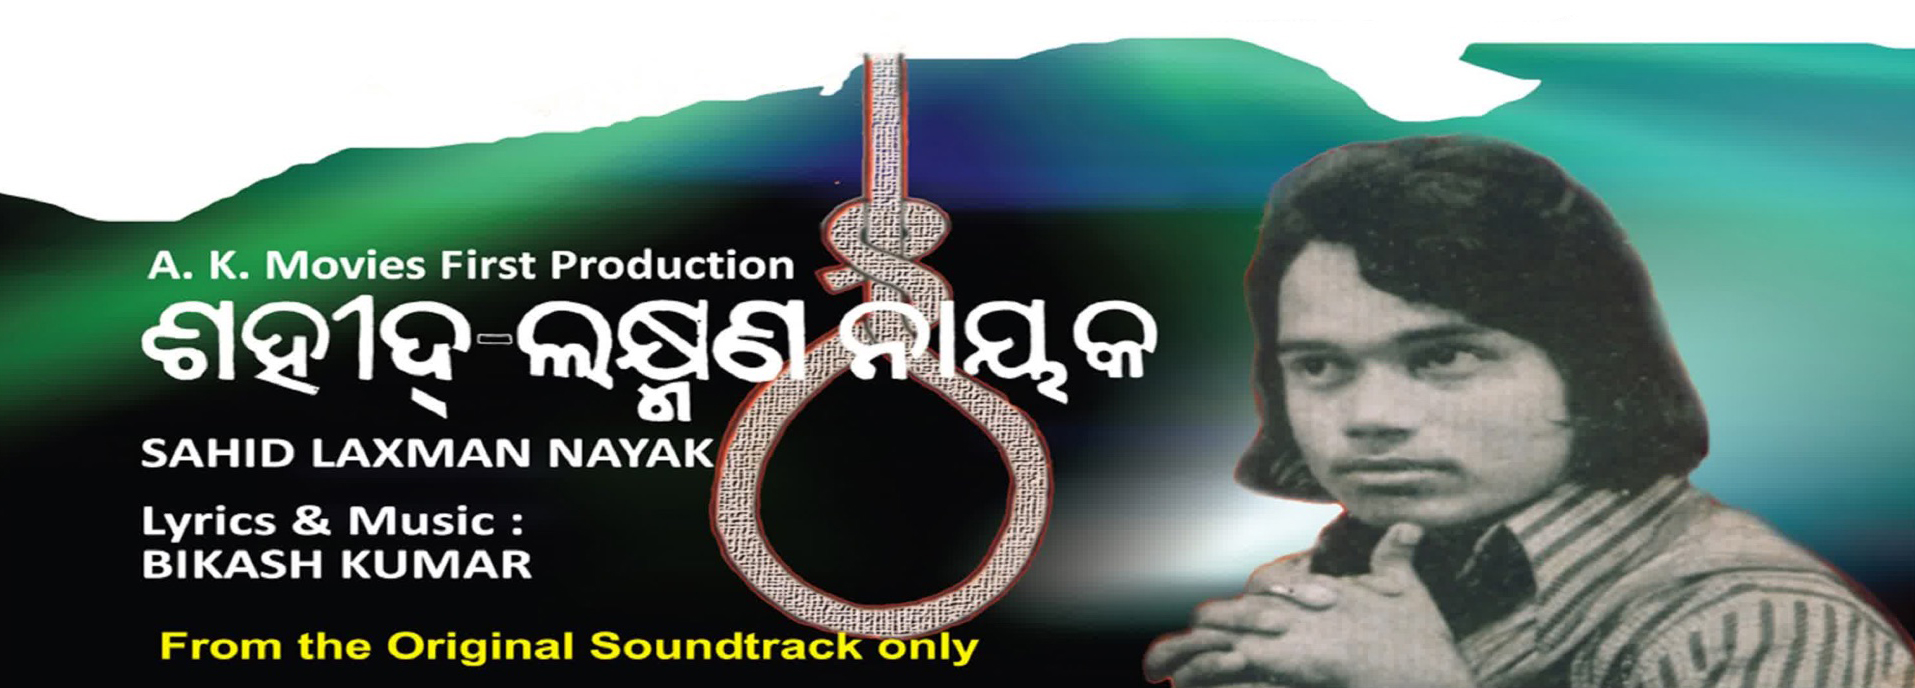 'Sahid Laxman Nayak' audio artwork